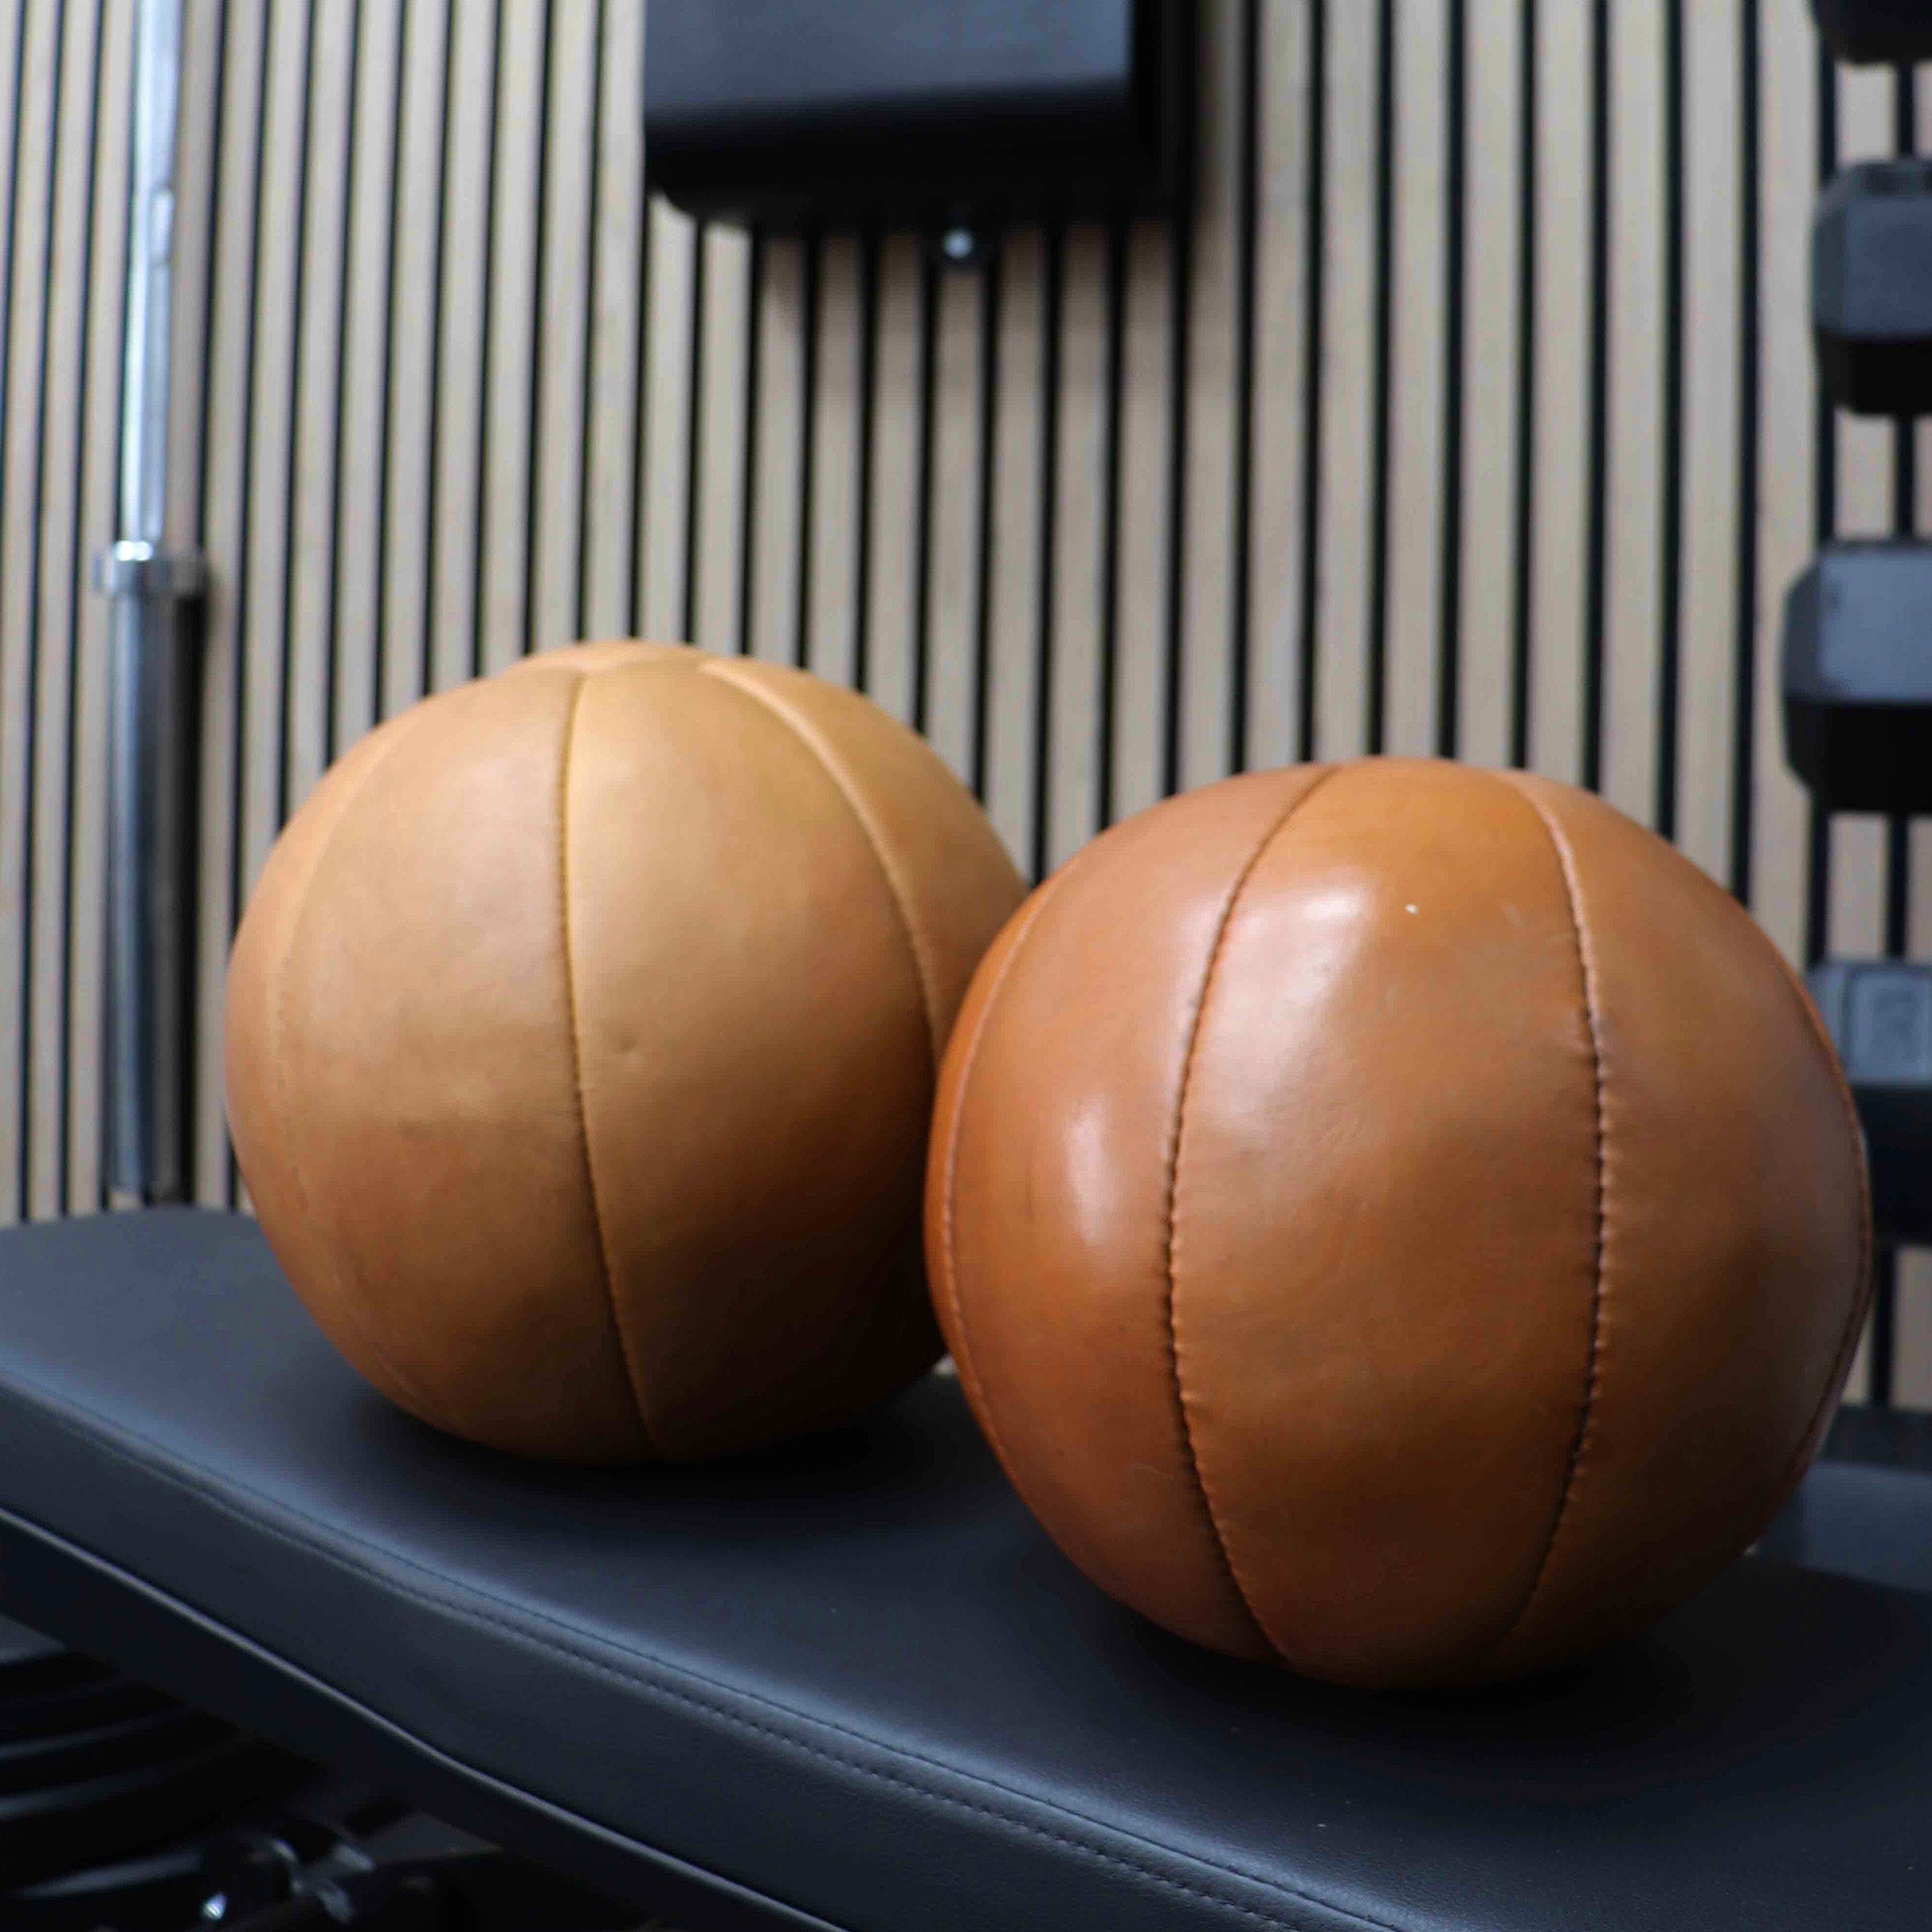 Classic Medicine Ball (Tan Leather)